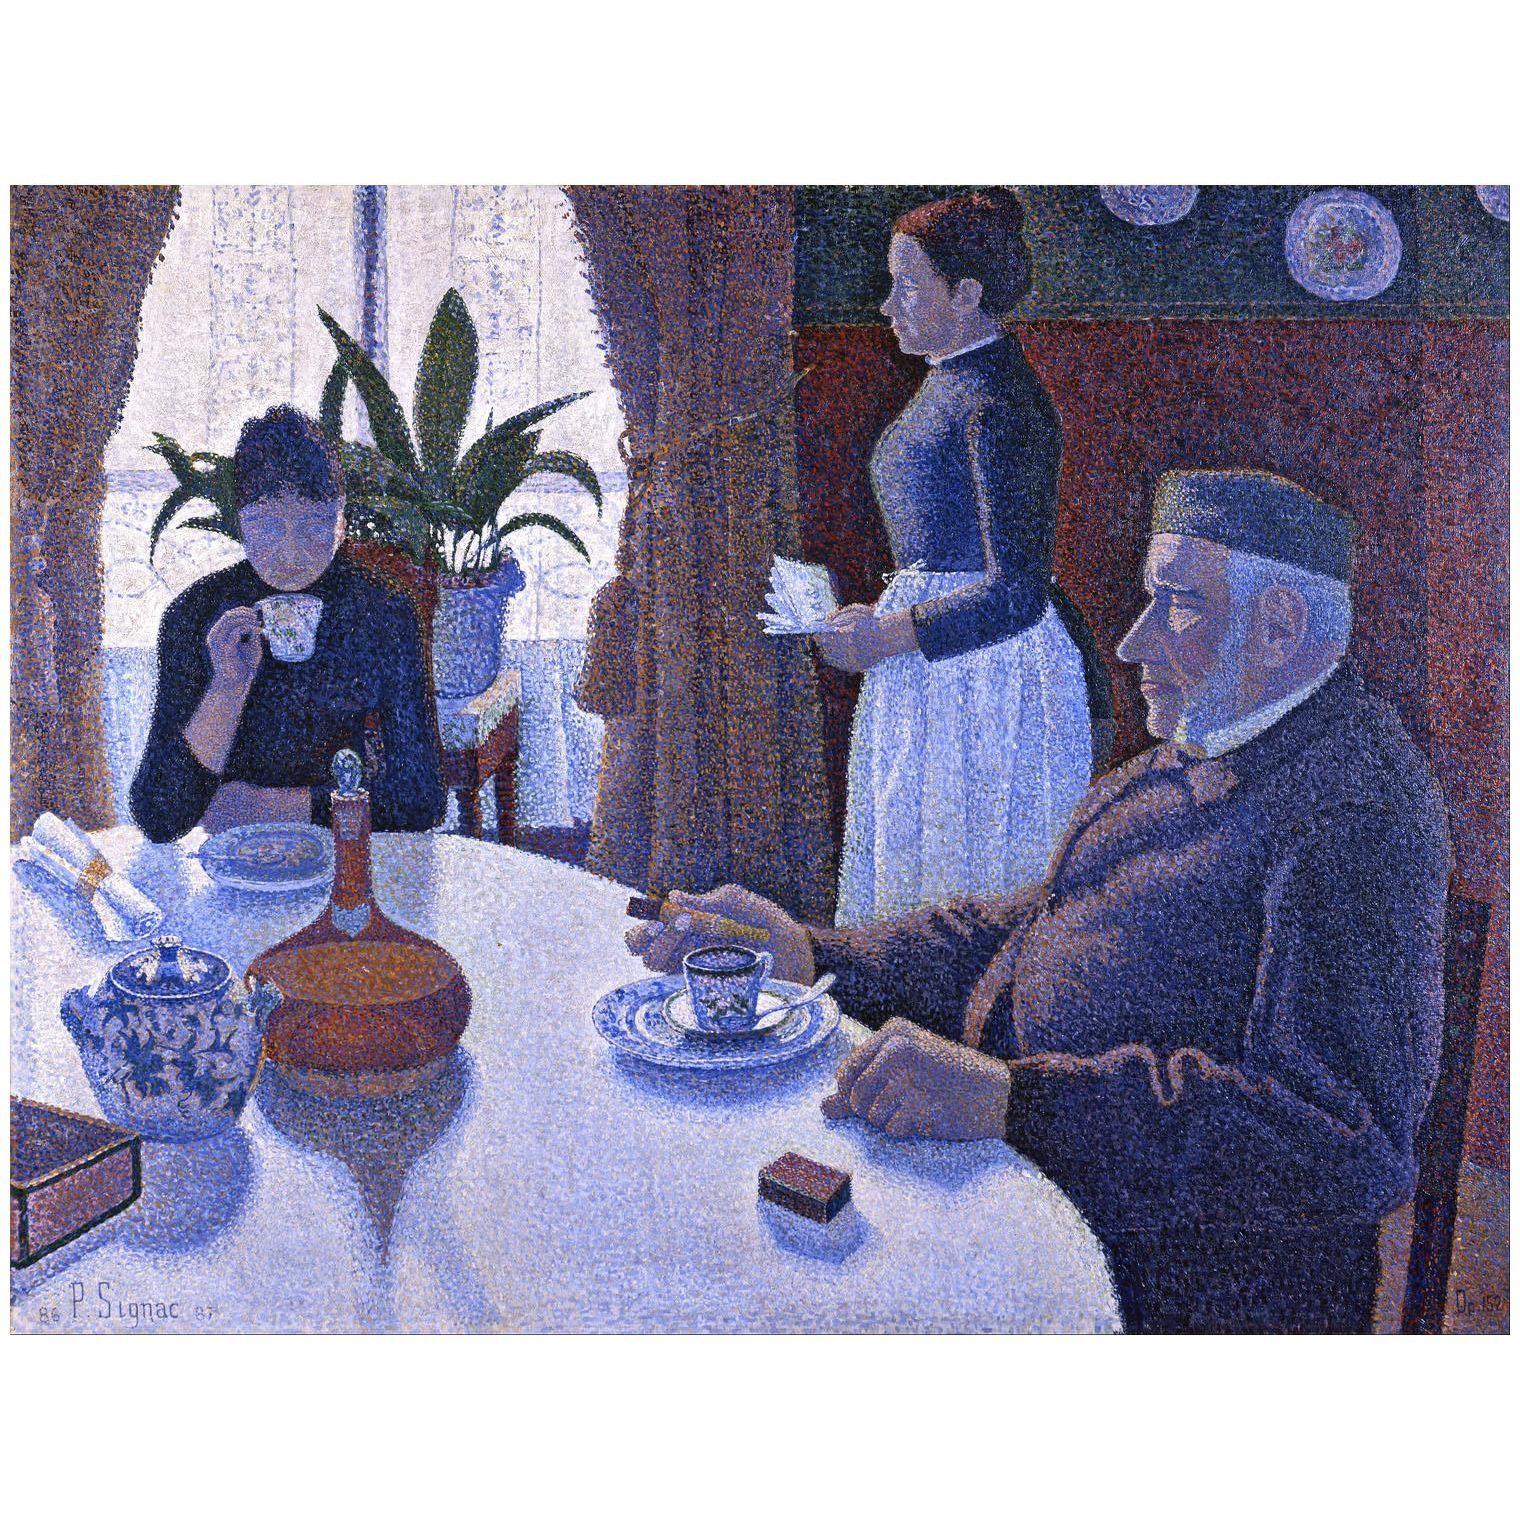 Paul Signac. Petit dejeuner. 1886. Kroller-Muller Museum Otterlo